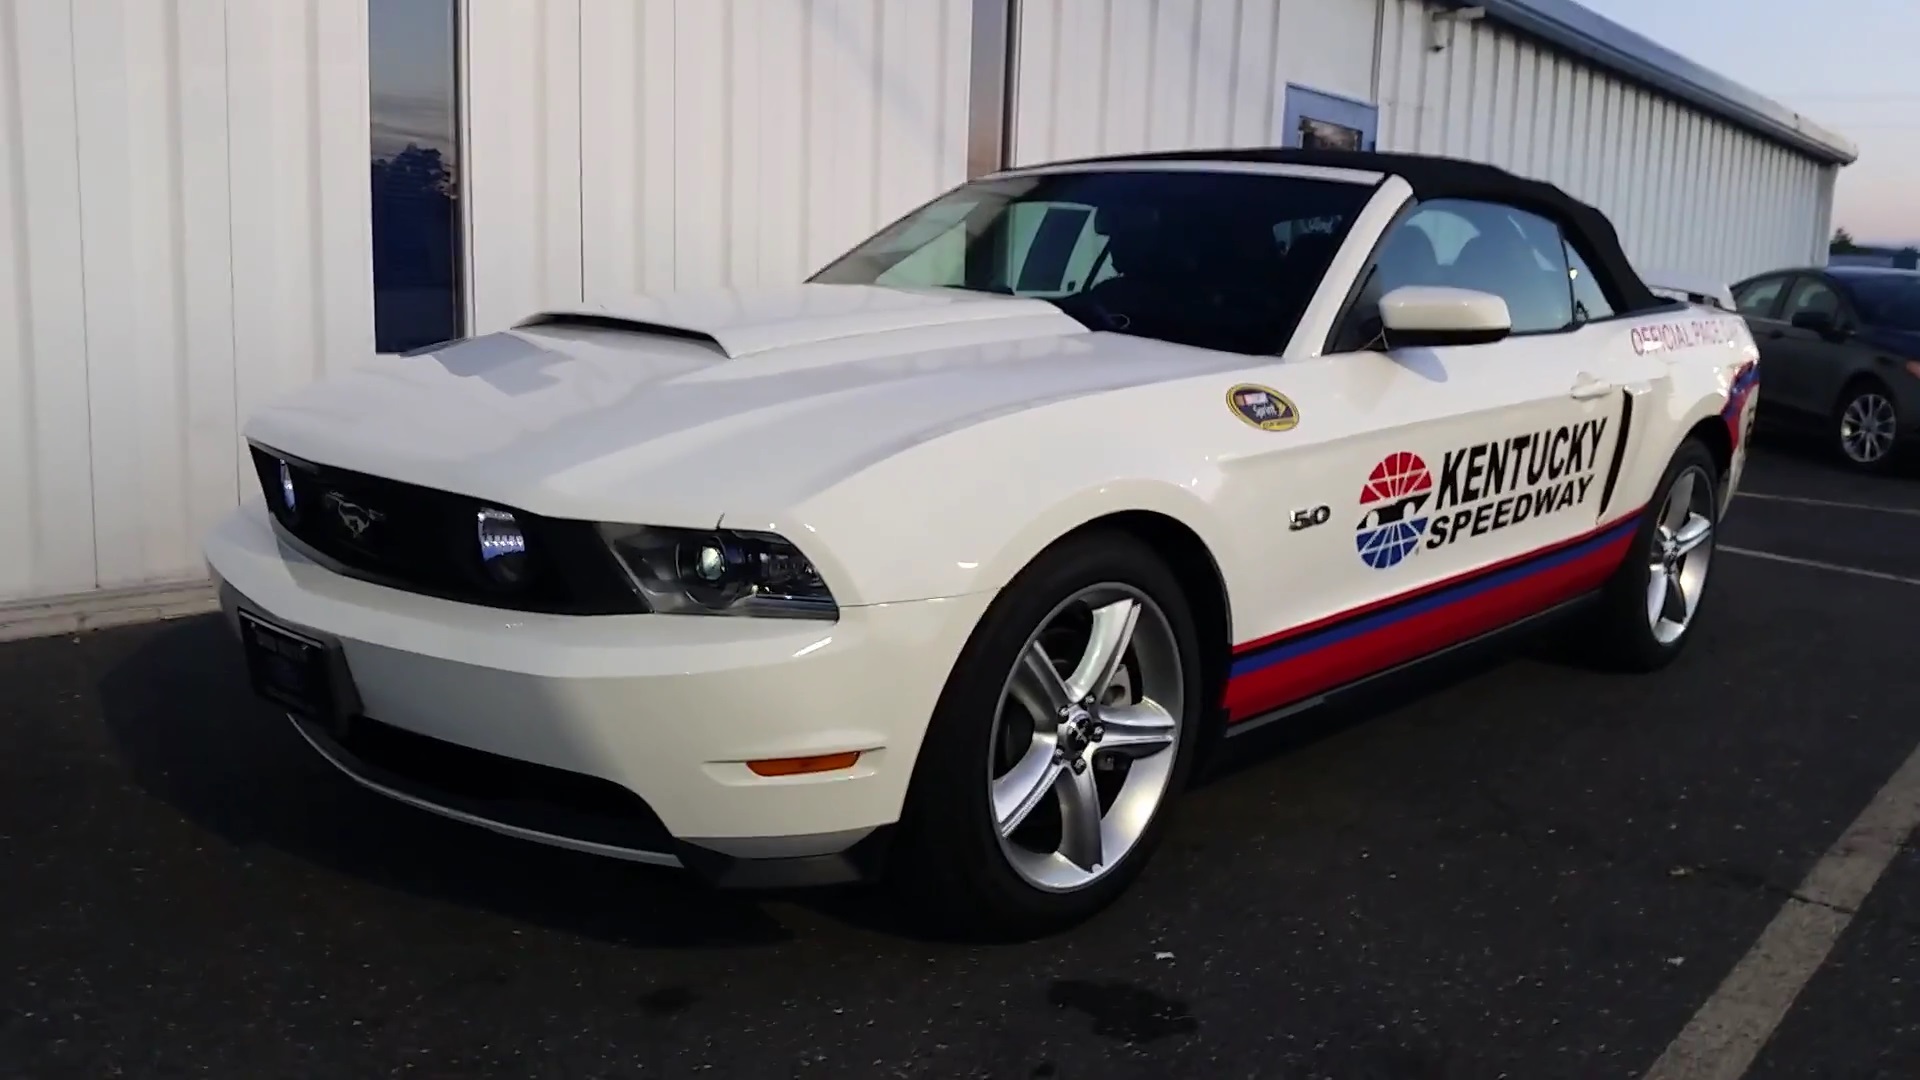 Video: 2012 Ford Mustang Kentucky Speedway Pace Car Walkaround